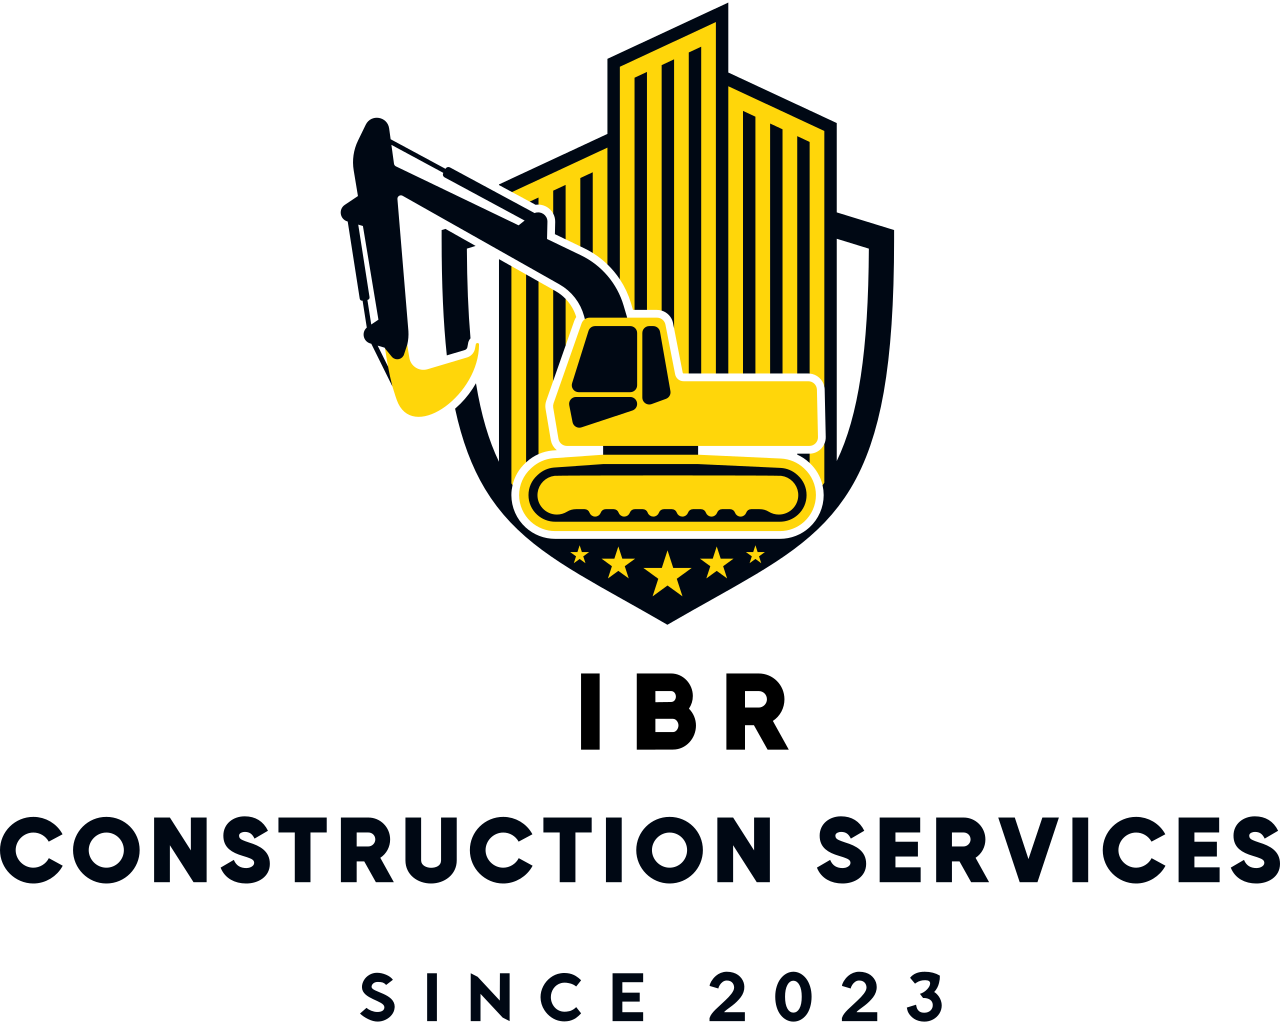  Construction Services's logo